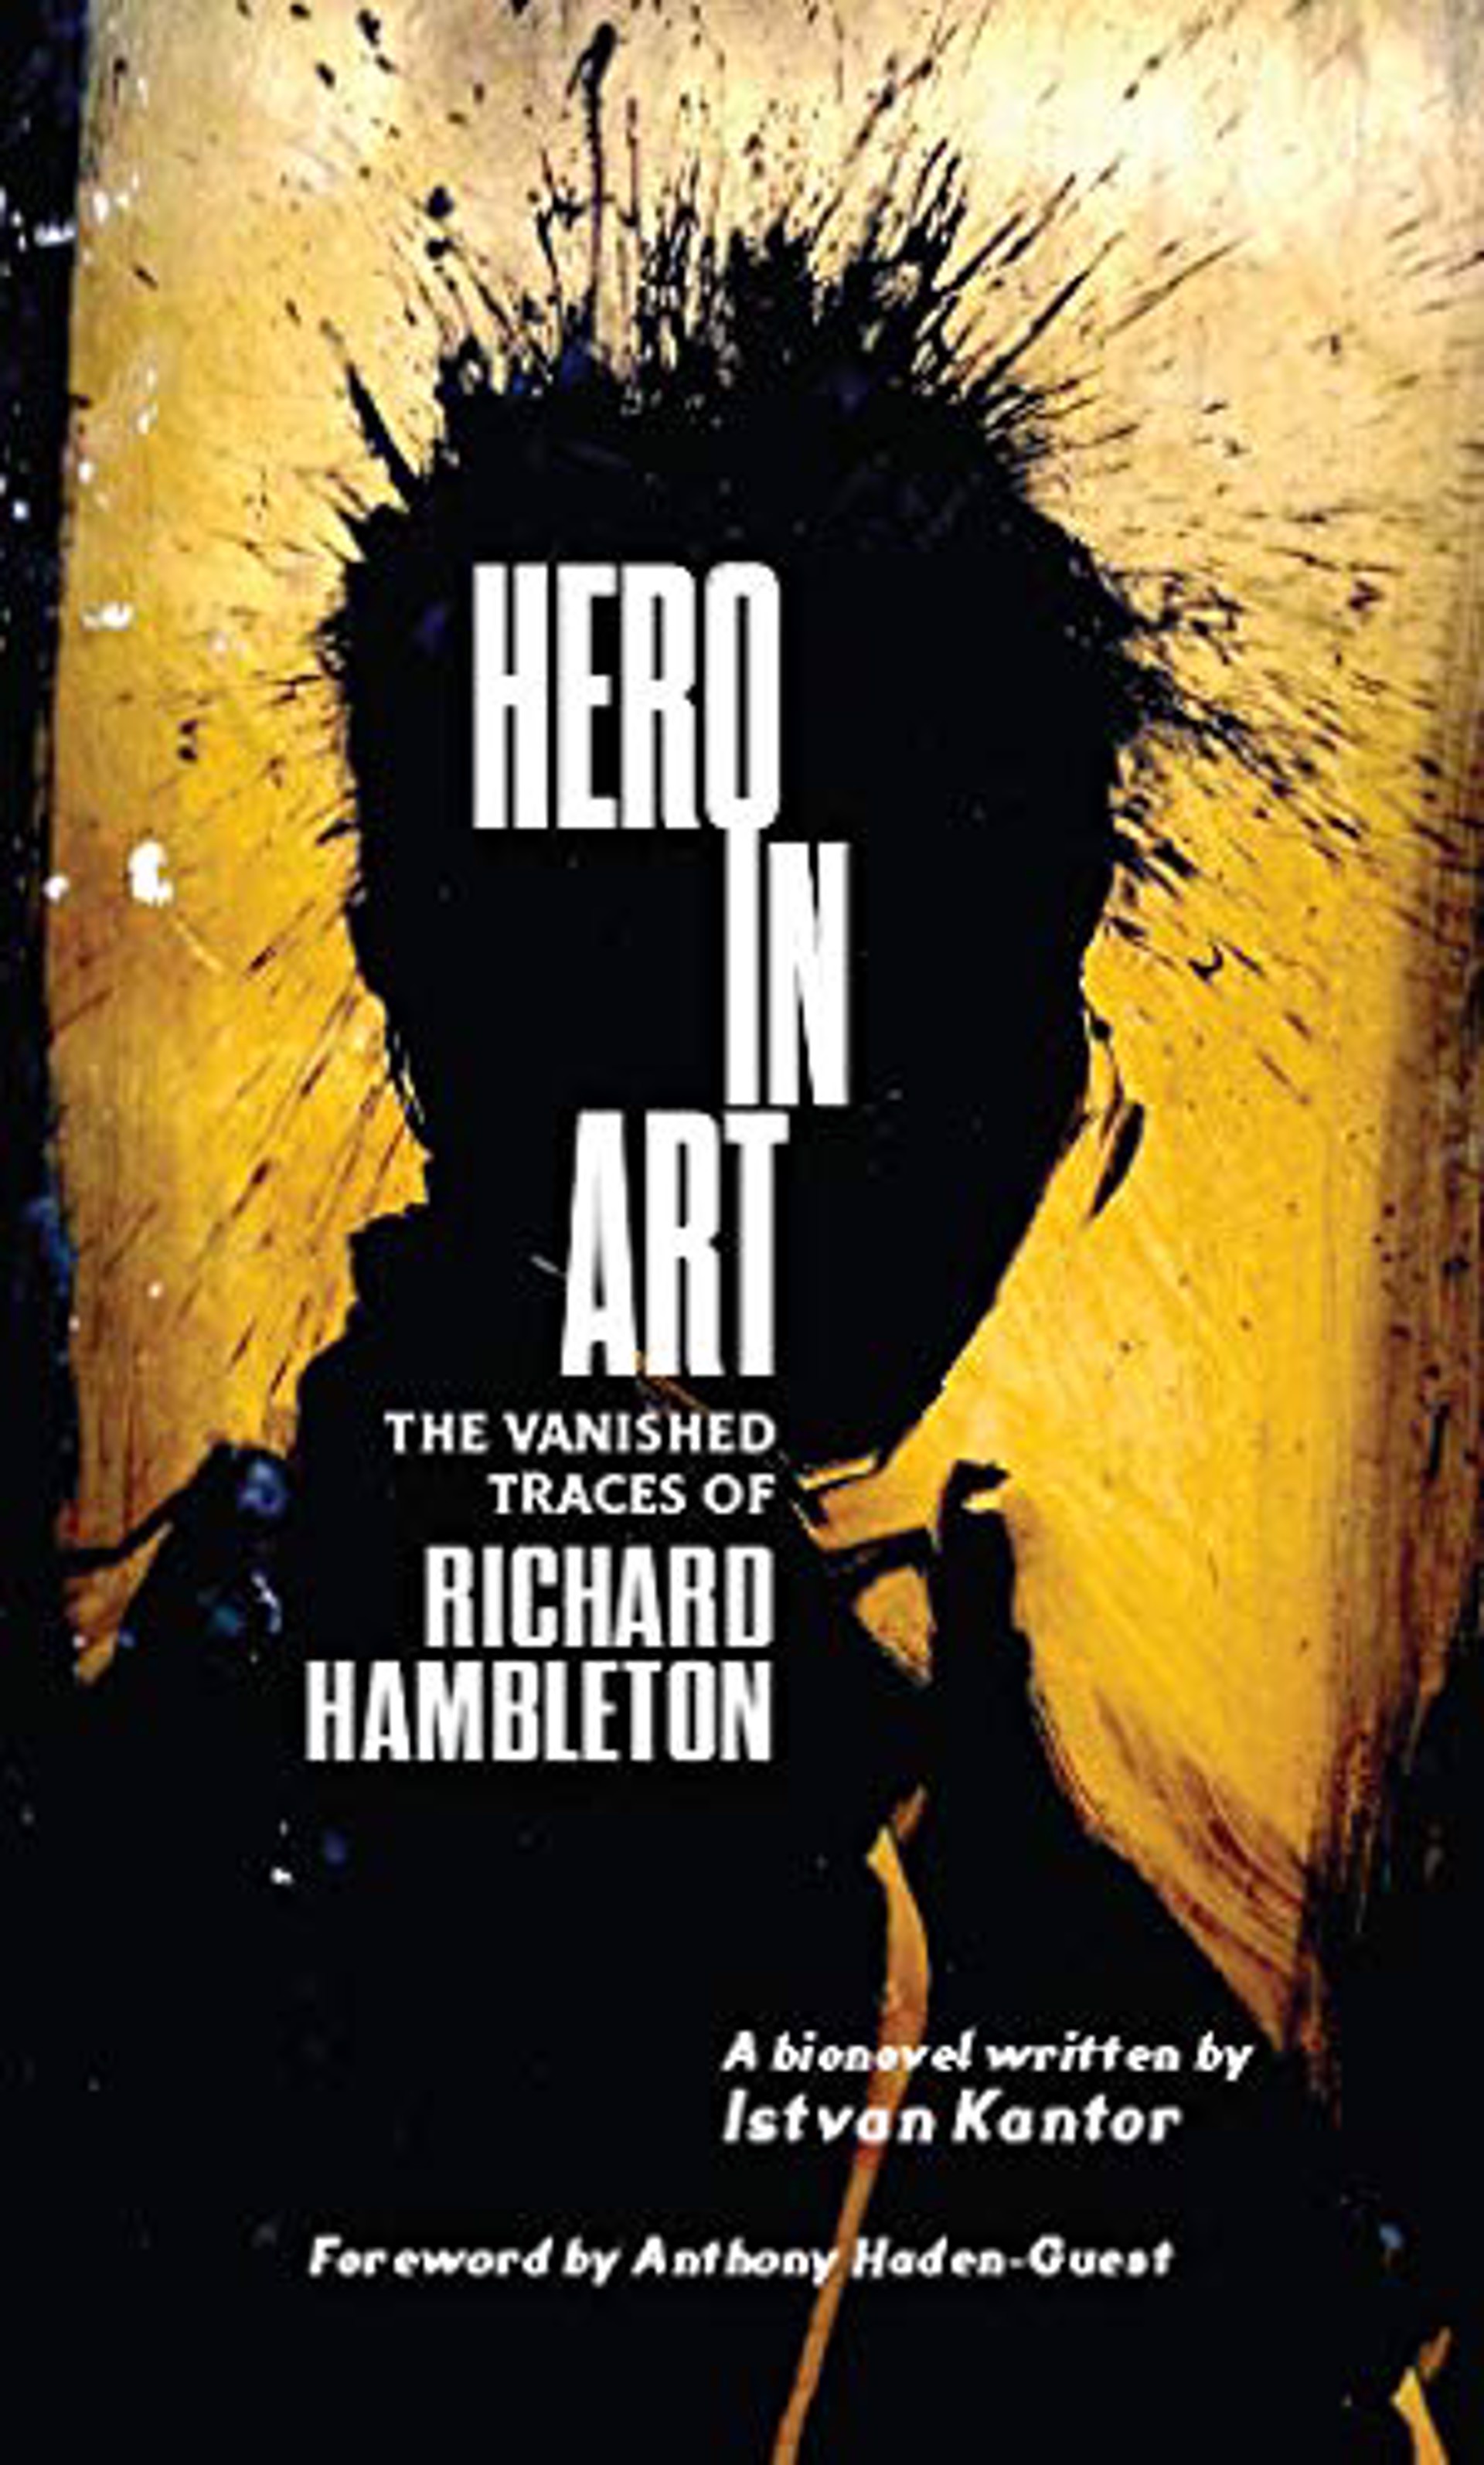 Hero in Art: The Vanished Traces of Richard Hambleton by Richard Hambleton